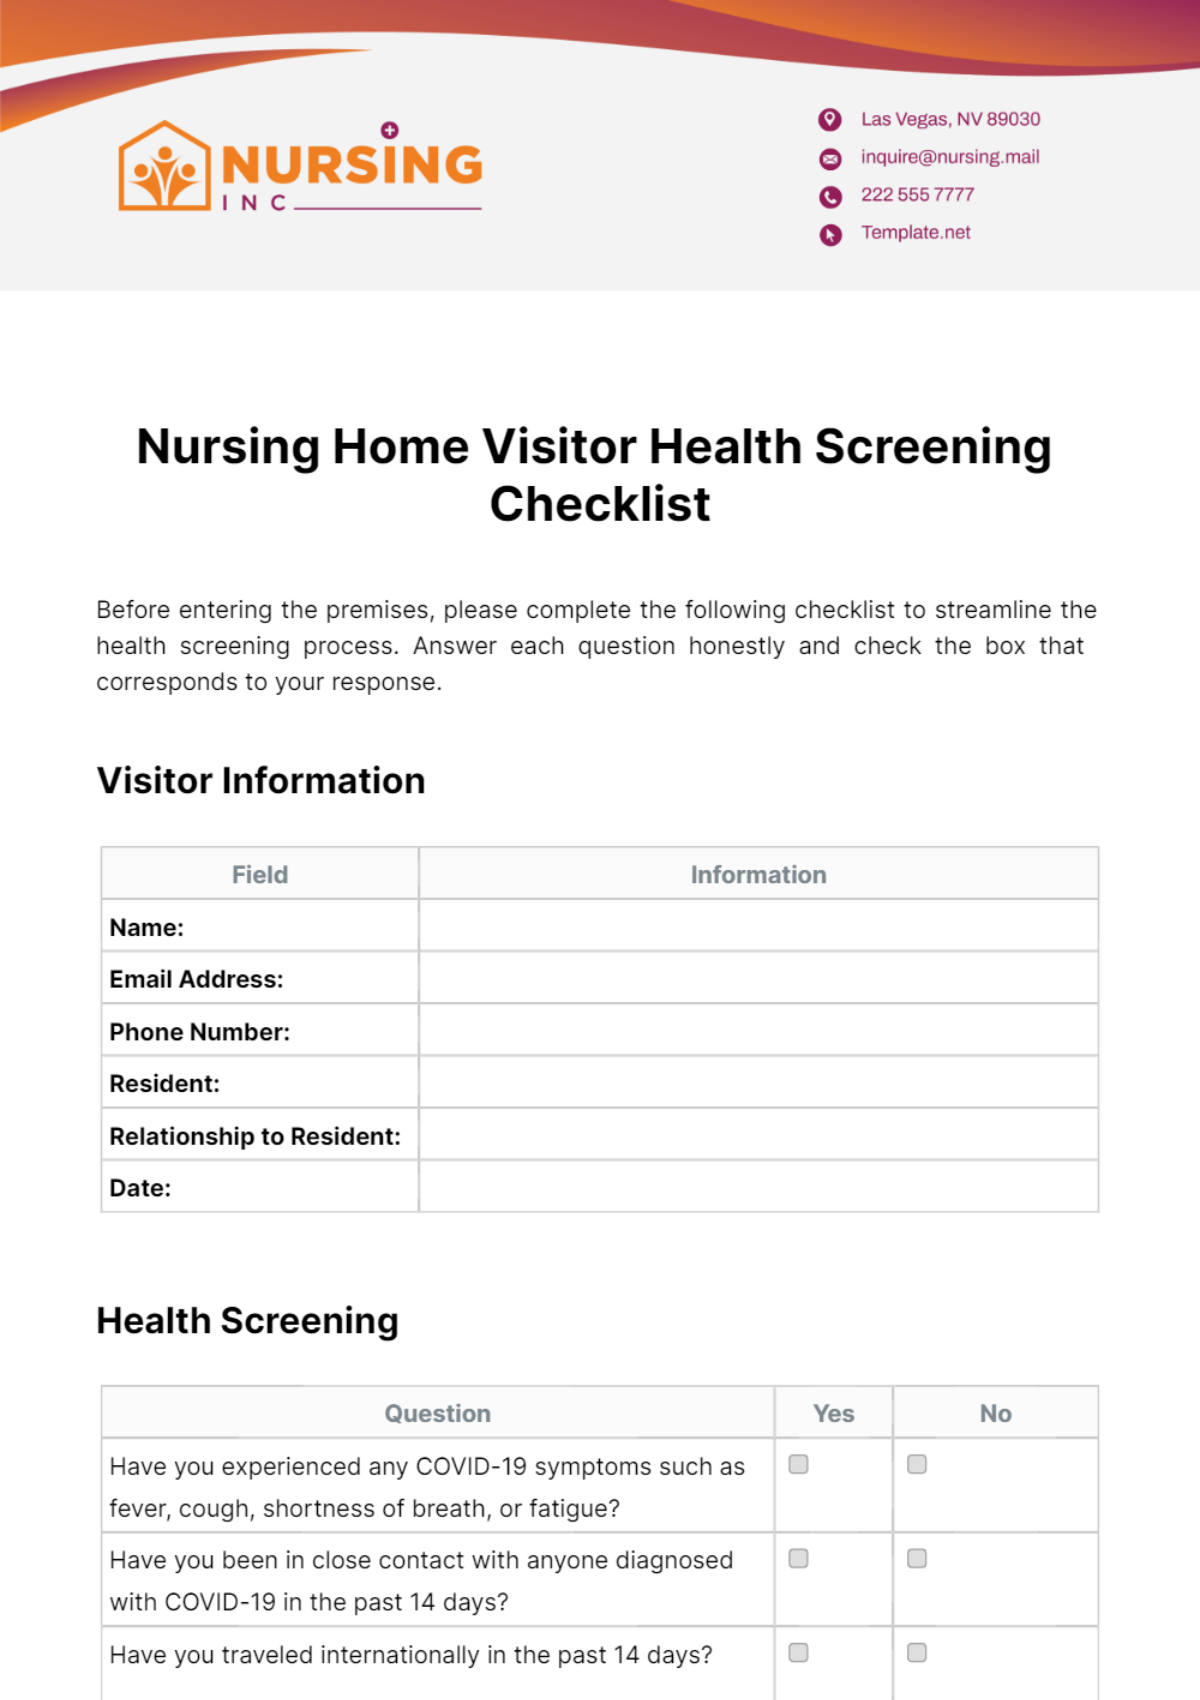 Nursing Home Visitor Health Screening Checklist Template